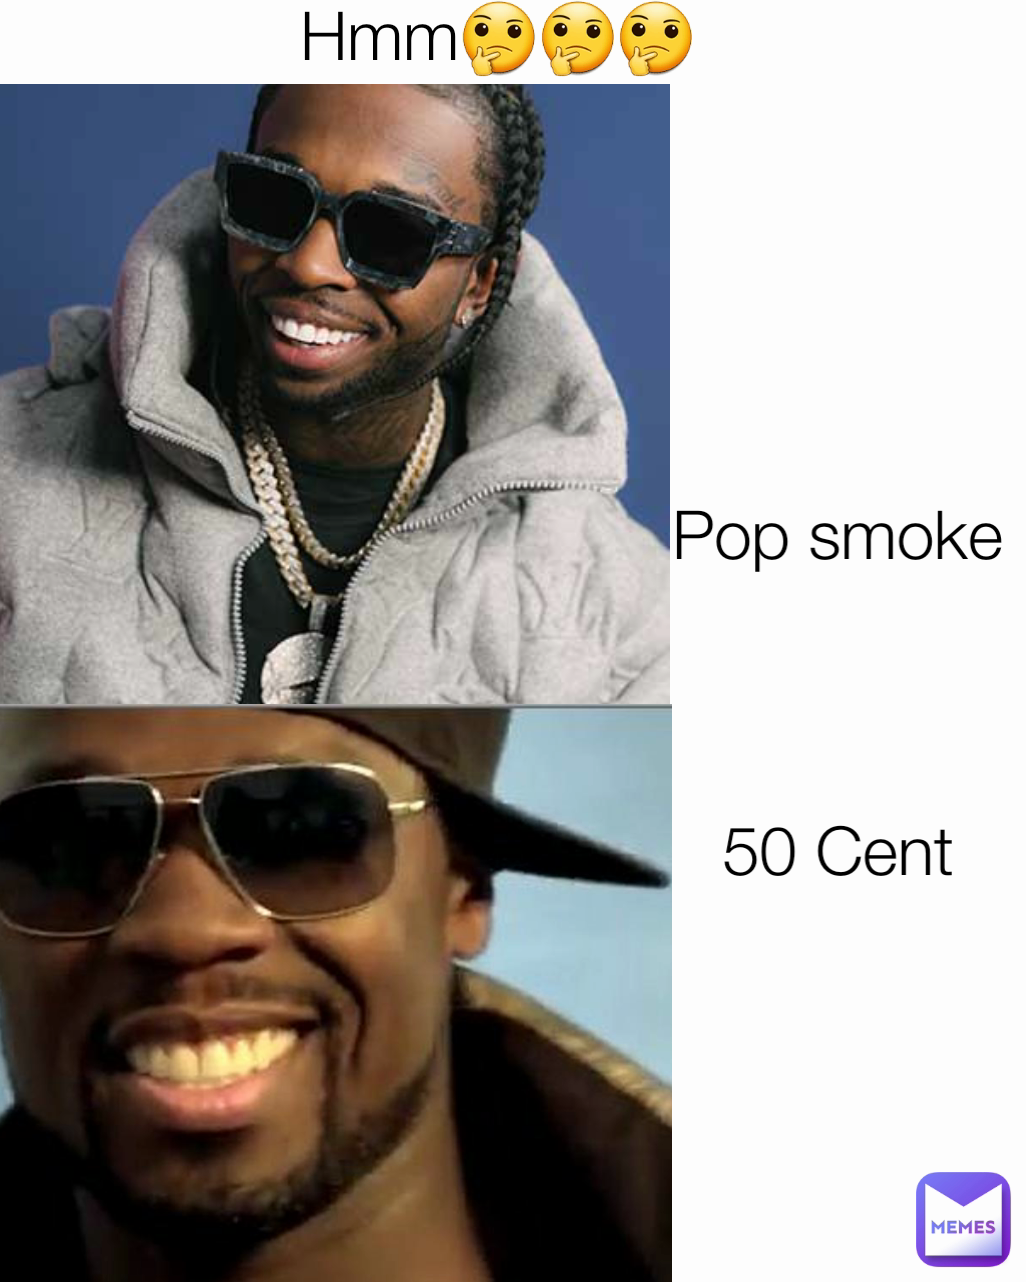 Hmm🤔🤔🤔 Pop smoke



50 Cent